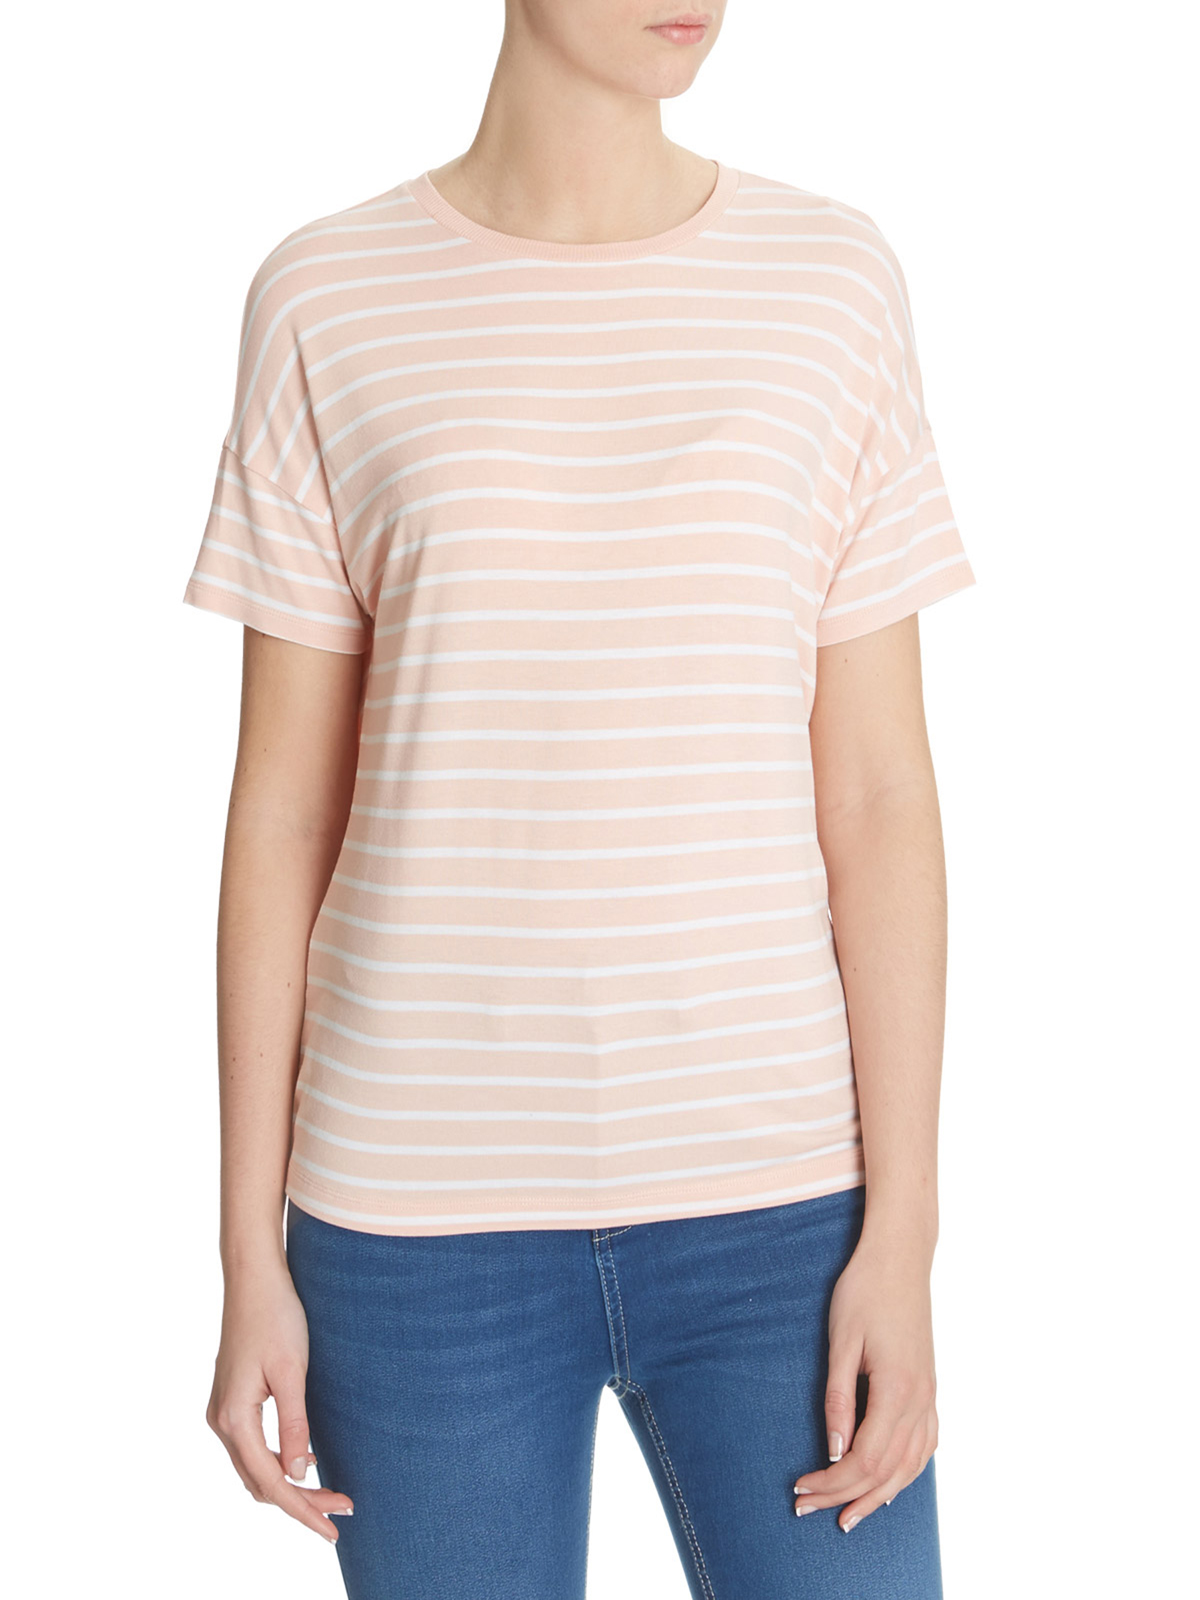 Dunn3s BLUSH Short Sleeve Striped Jersey T-Shirt - Size 10 to 18